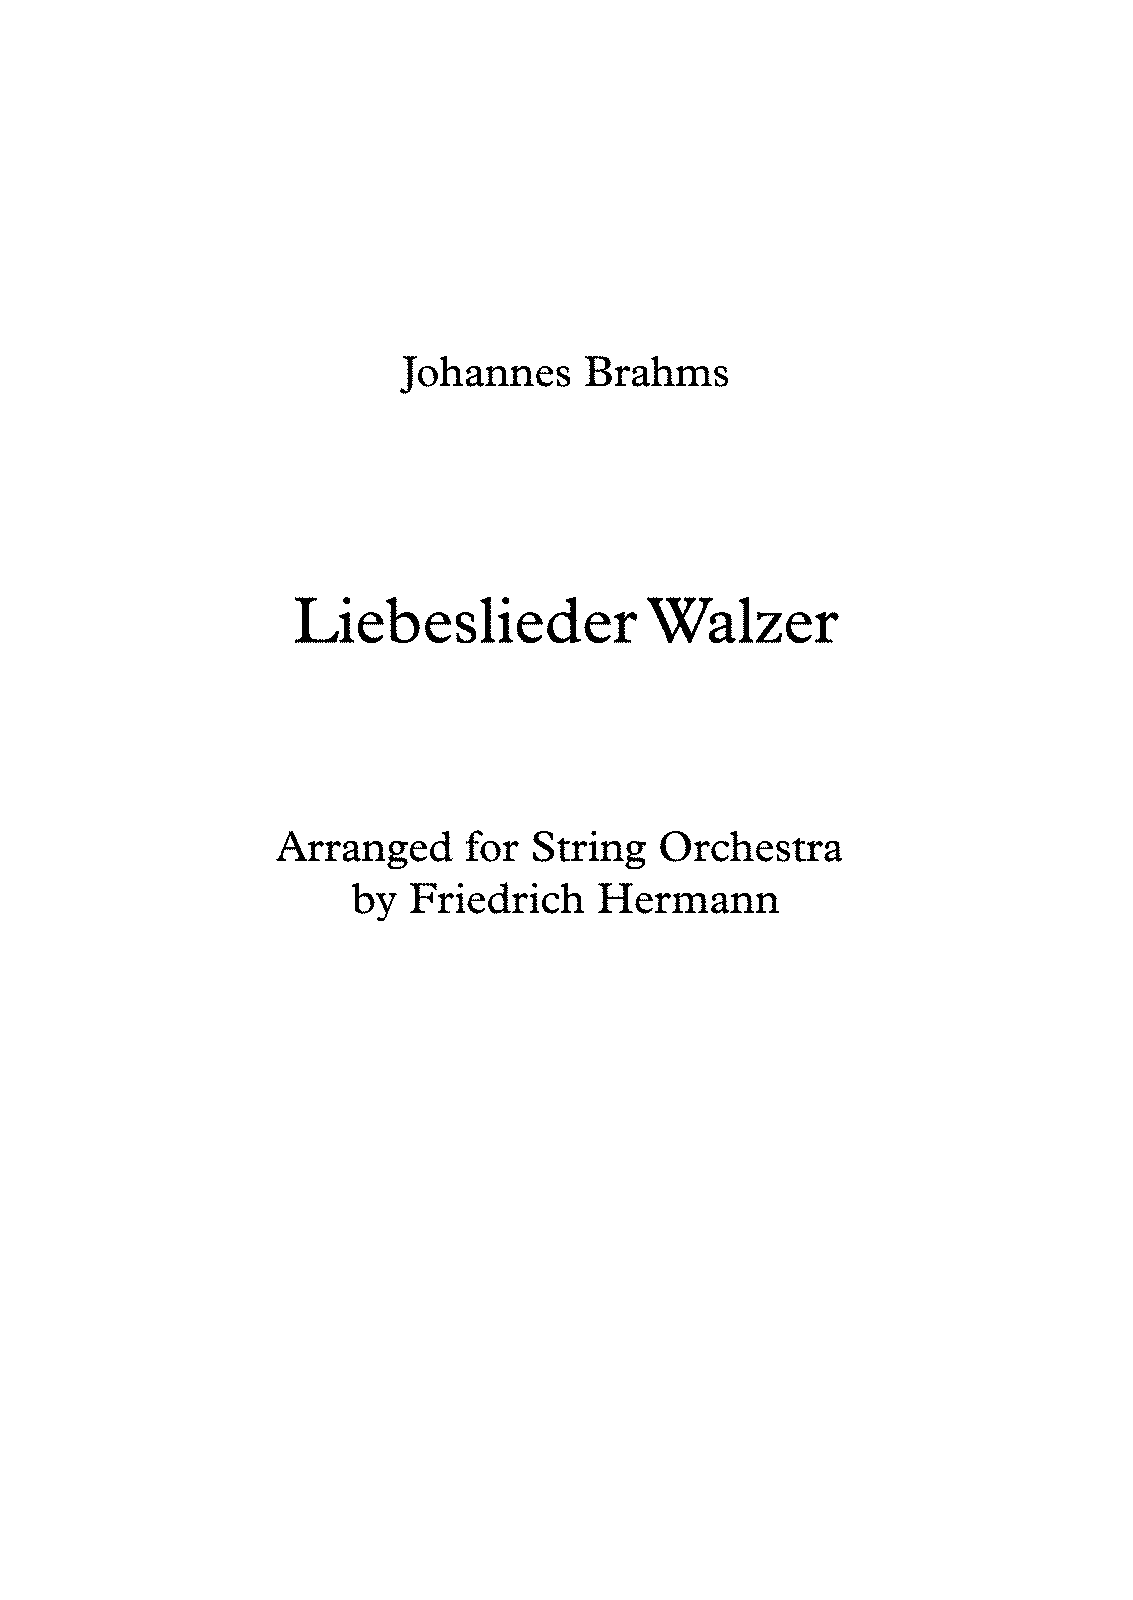 Liebeslieder Waltzes Op52 Brahms Johannes Imslp Free Sheet Music Pdf Download 7516